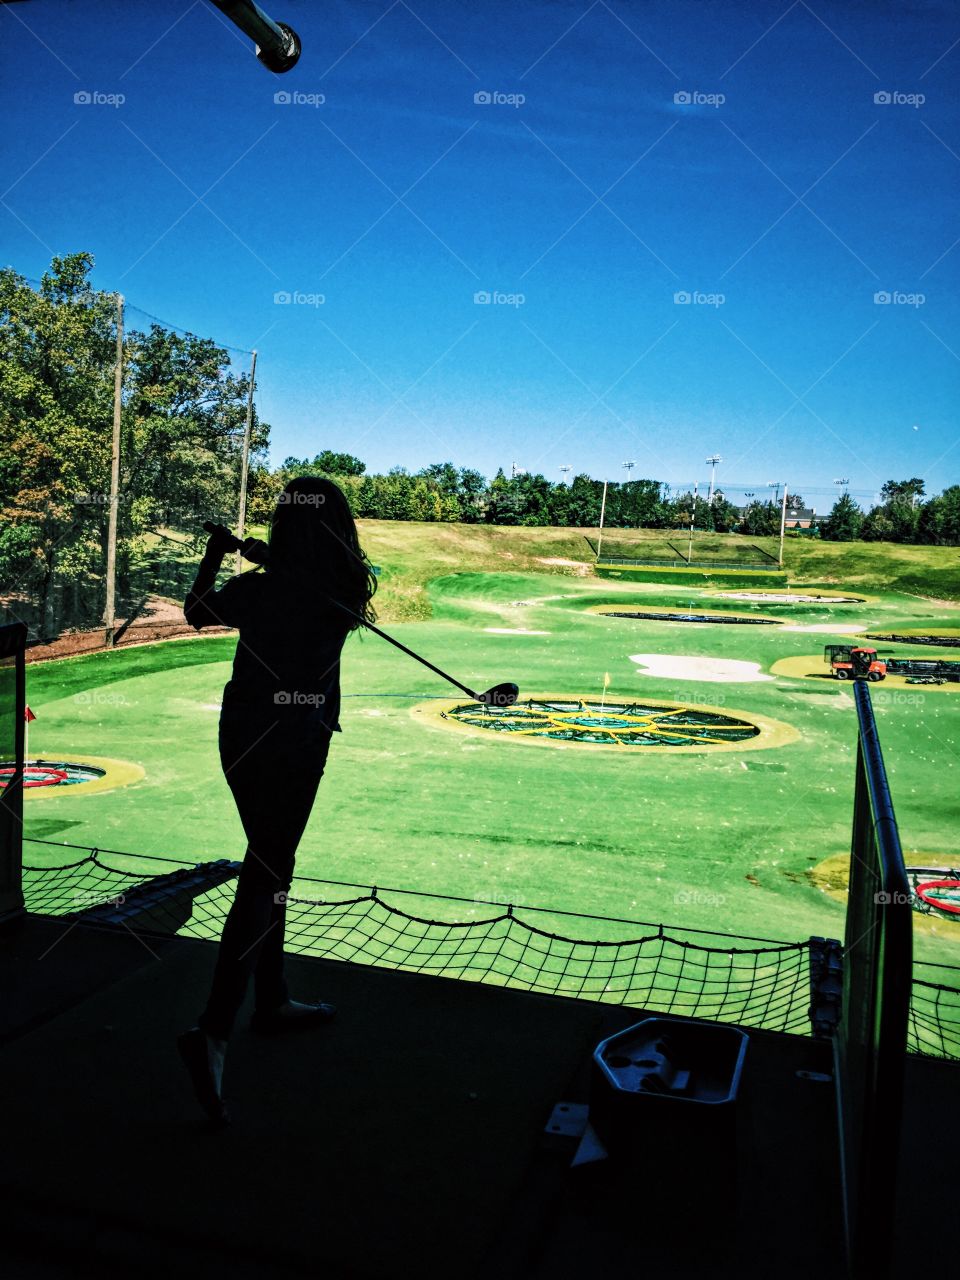 Top Golf Girl. Top golf, Alexandria VA